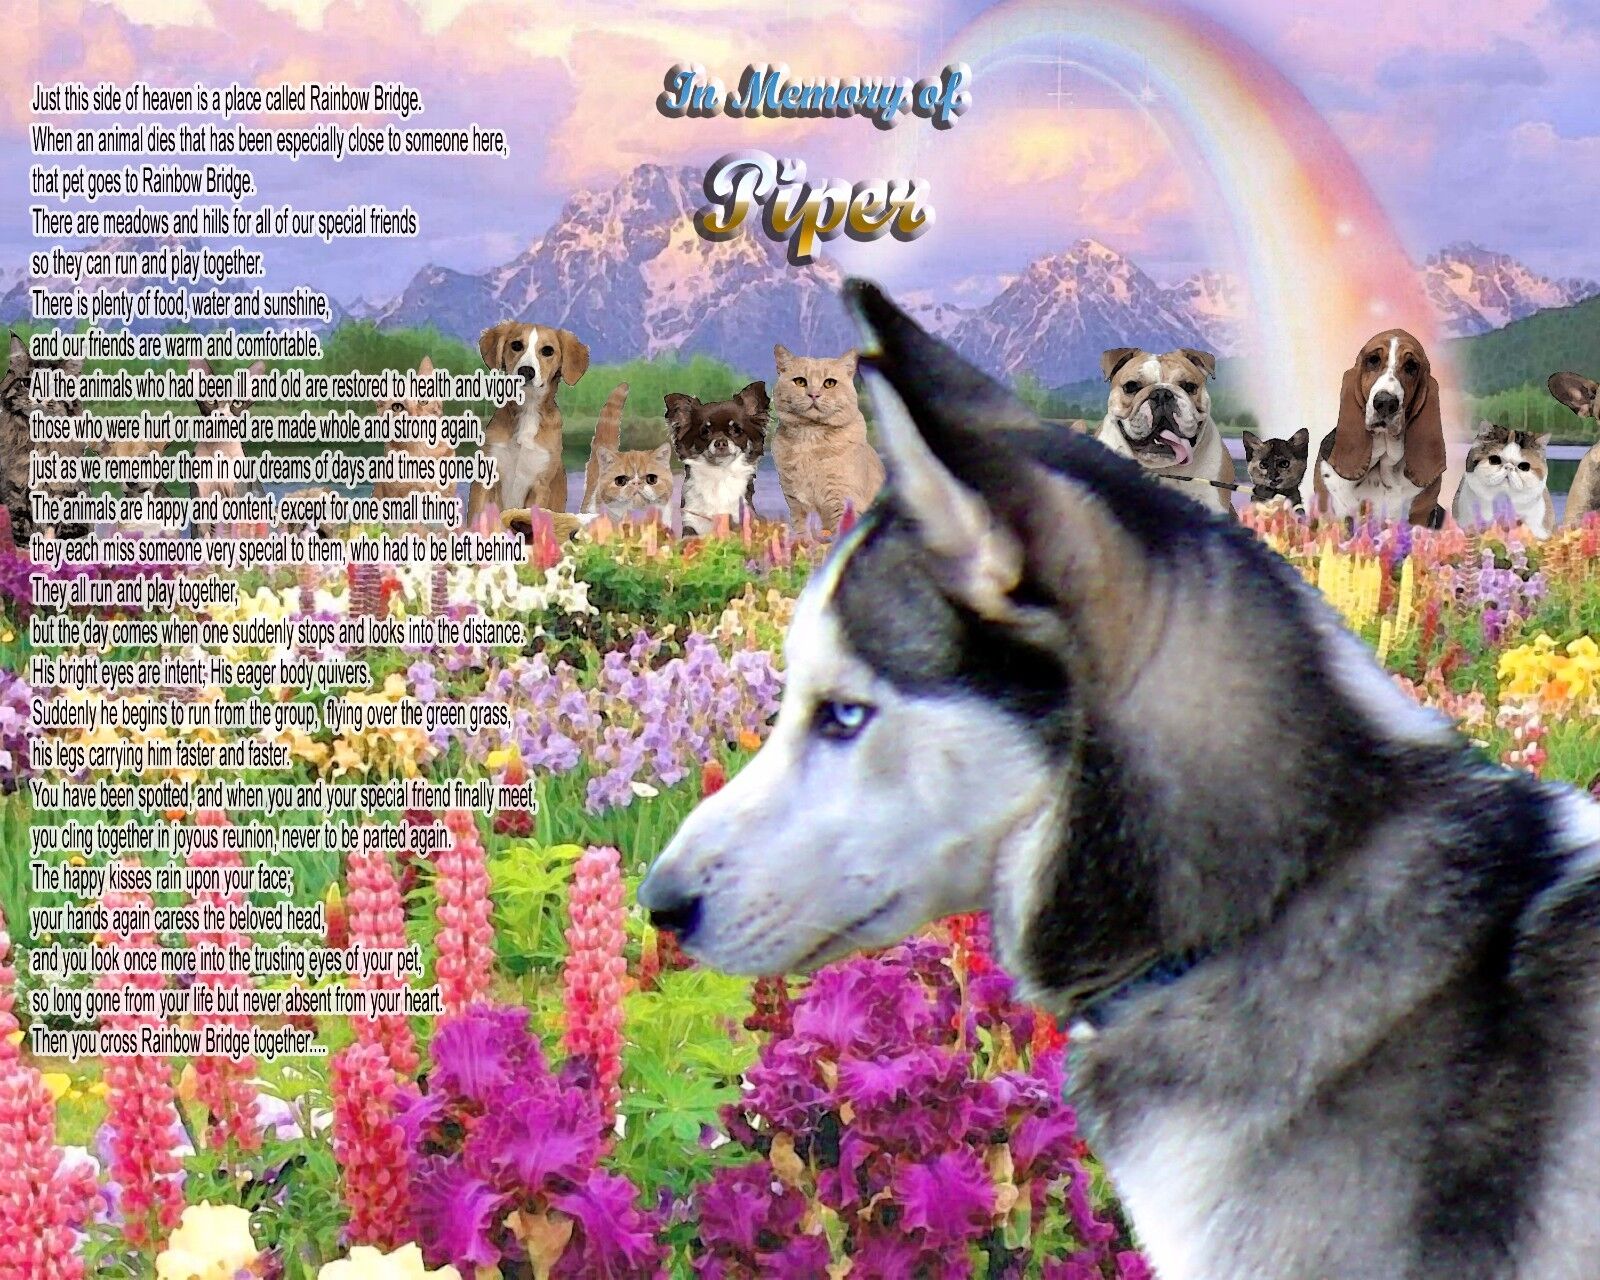 Siberian Husky Memorial Picture-Rainbow Bridge Poem Personalized w/Pet's Name